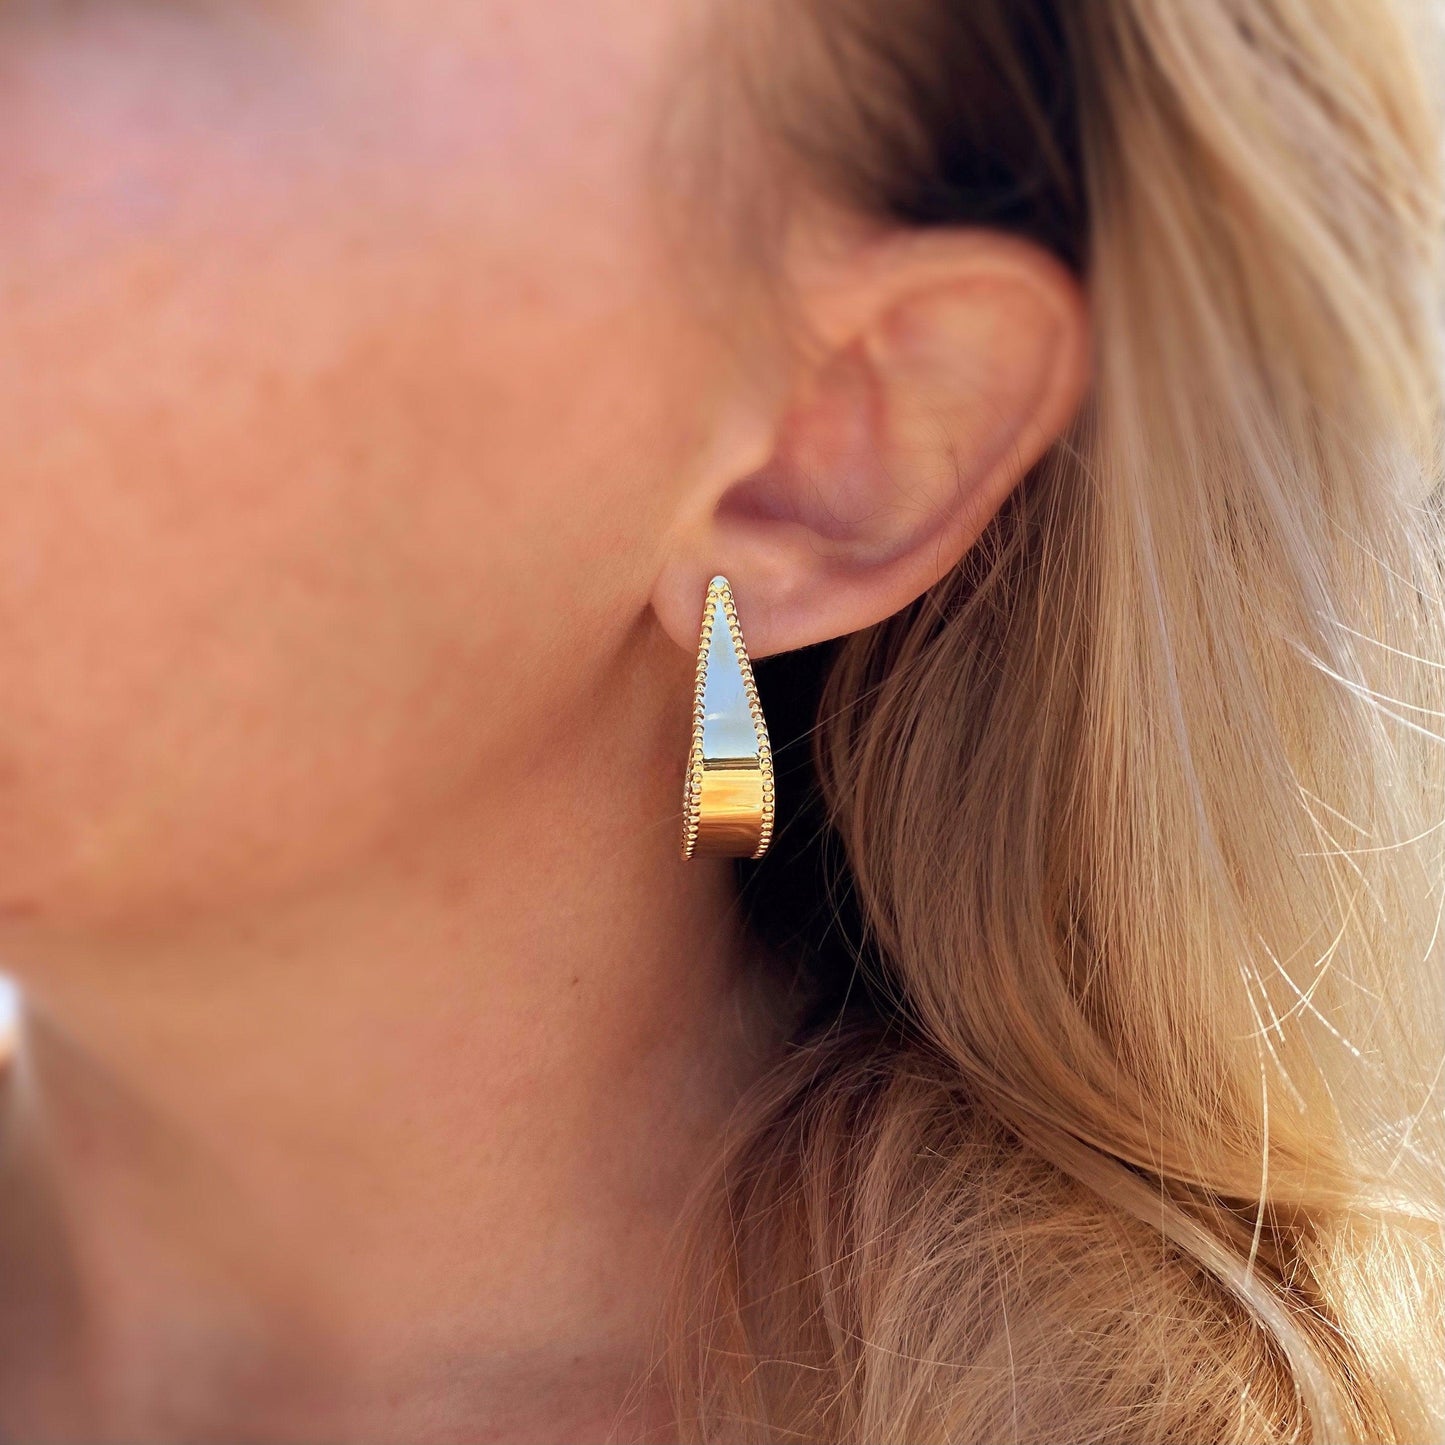 GoldFi 18k Gold Filled Hoop Earrings